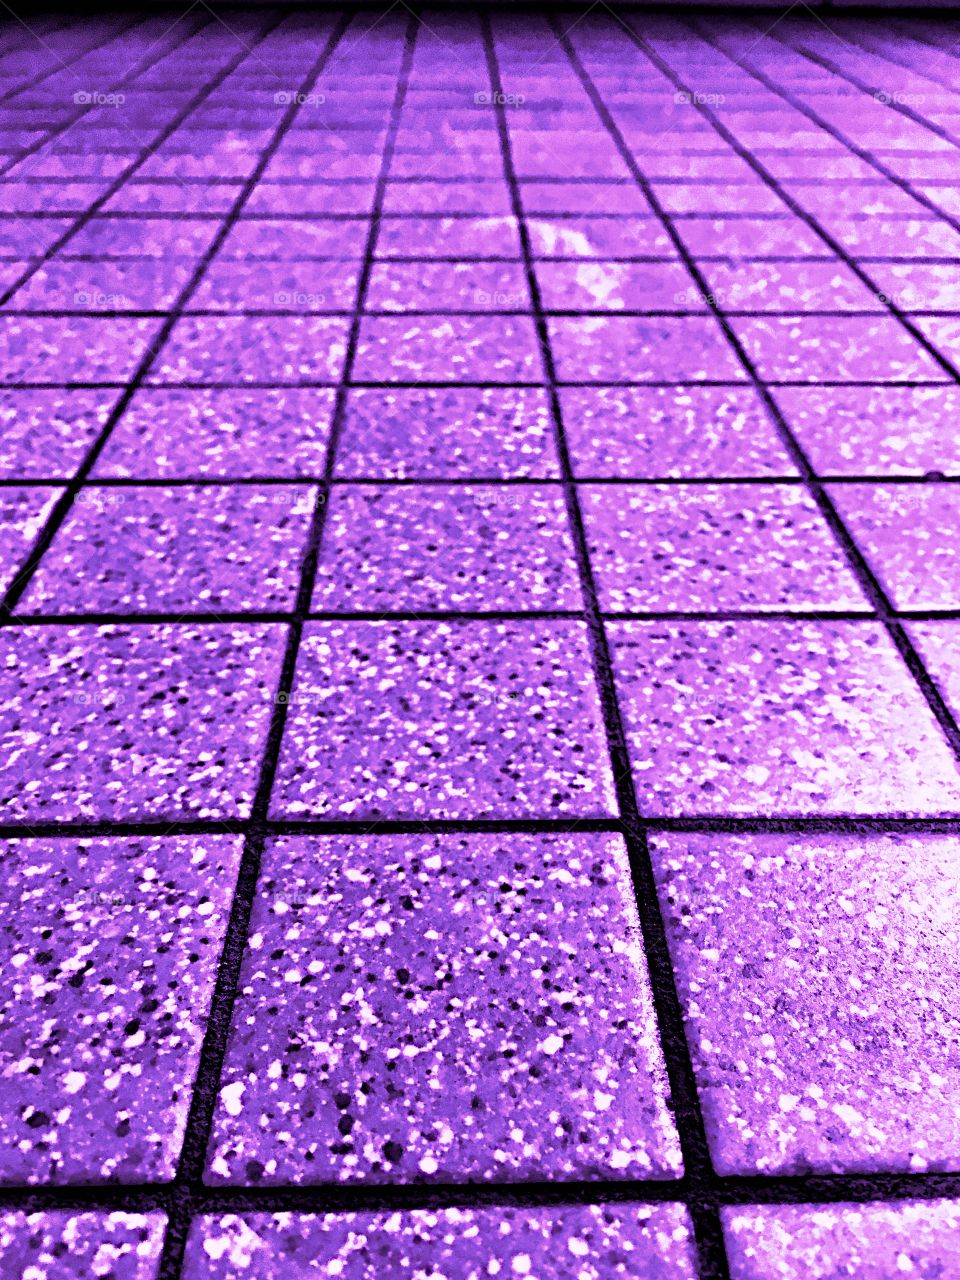 Close-up of purple tiles